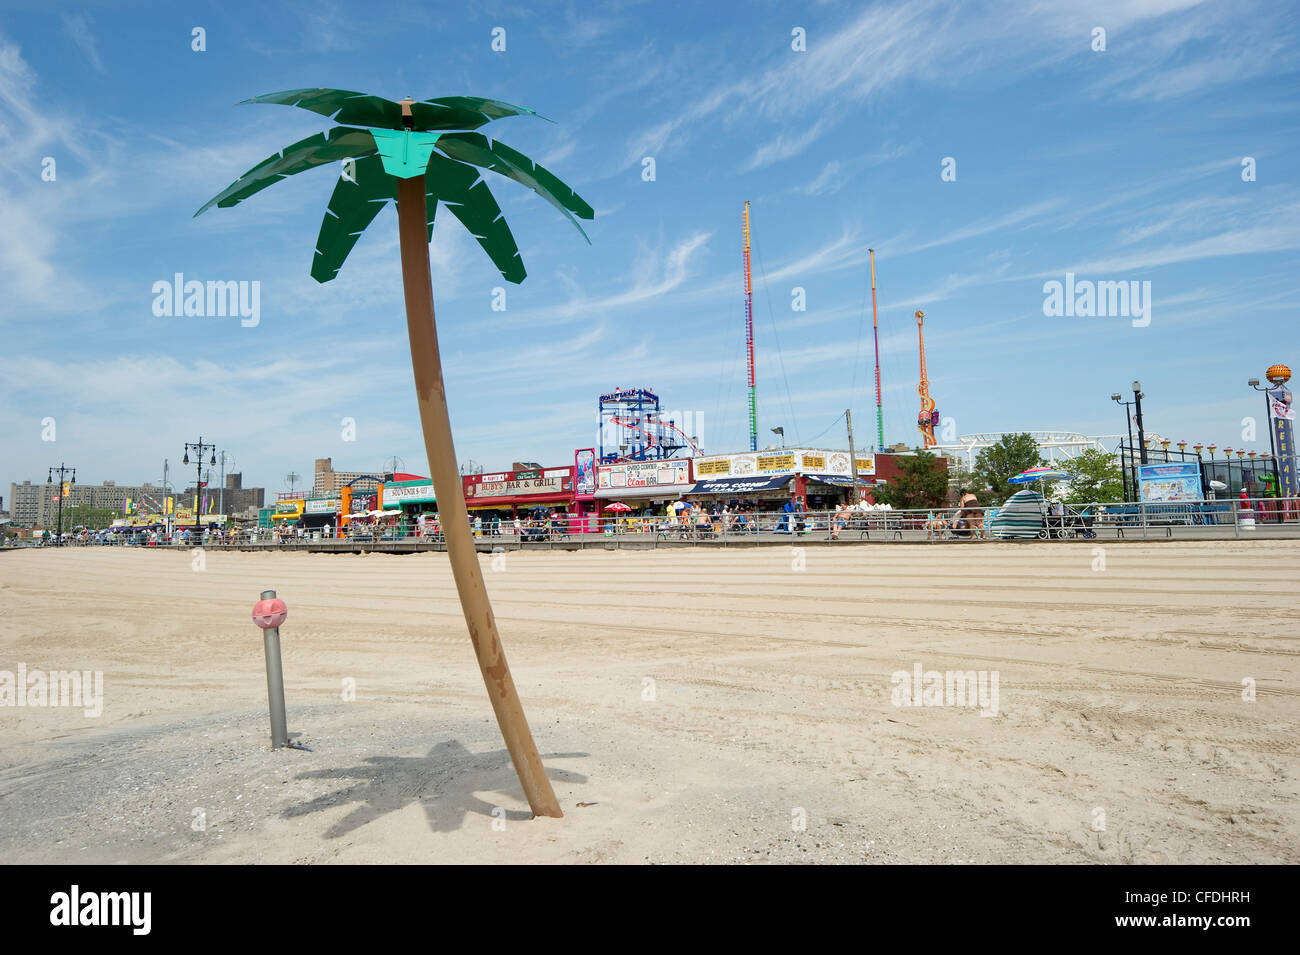 Palmshaped shower on the beach, Coney Island, Brooklyn, New York, USA, America Stock Photo